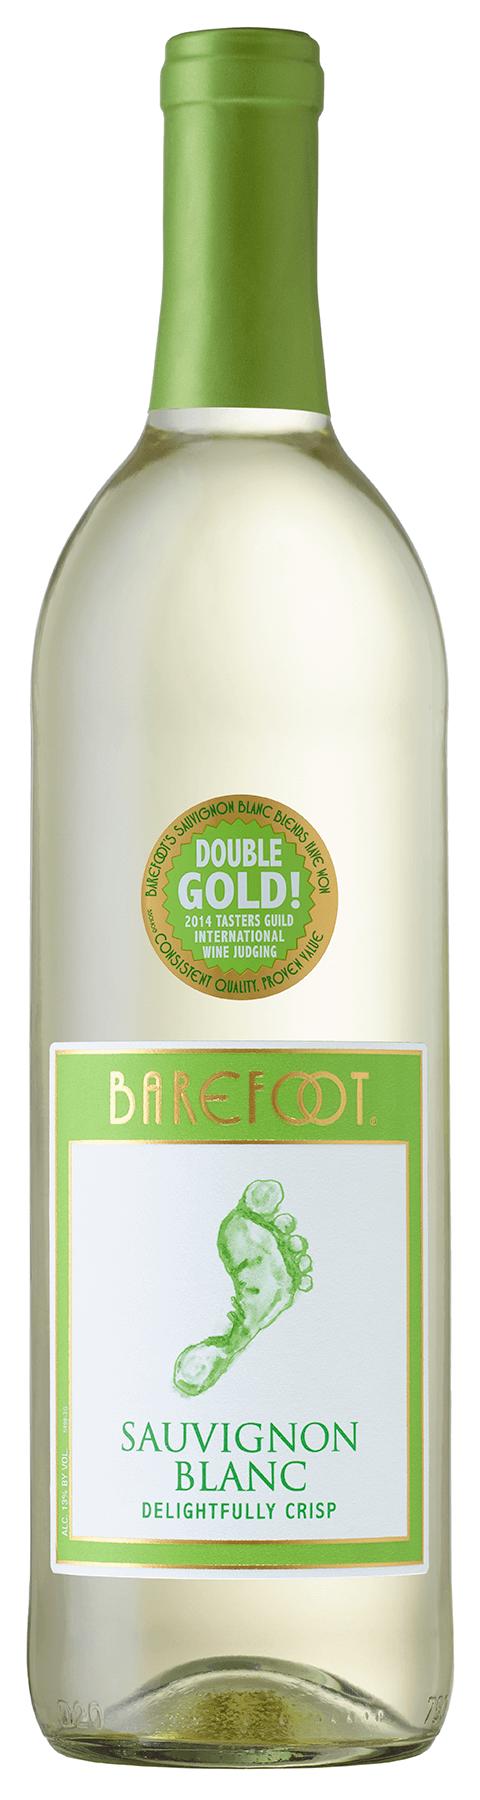 Barefoot Sauvignon Blanc 750 ml